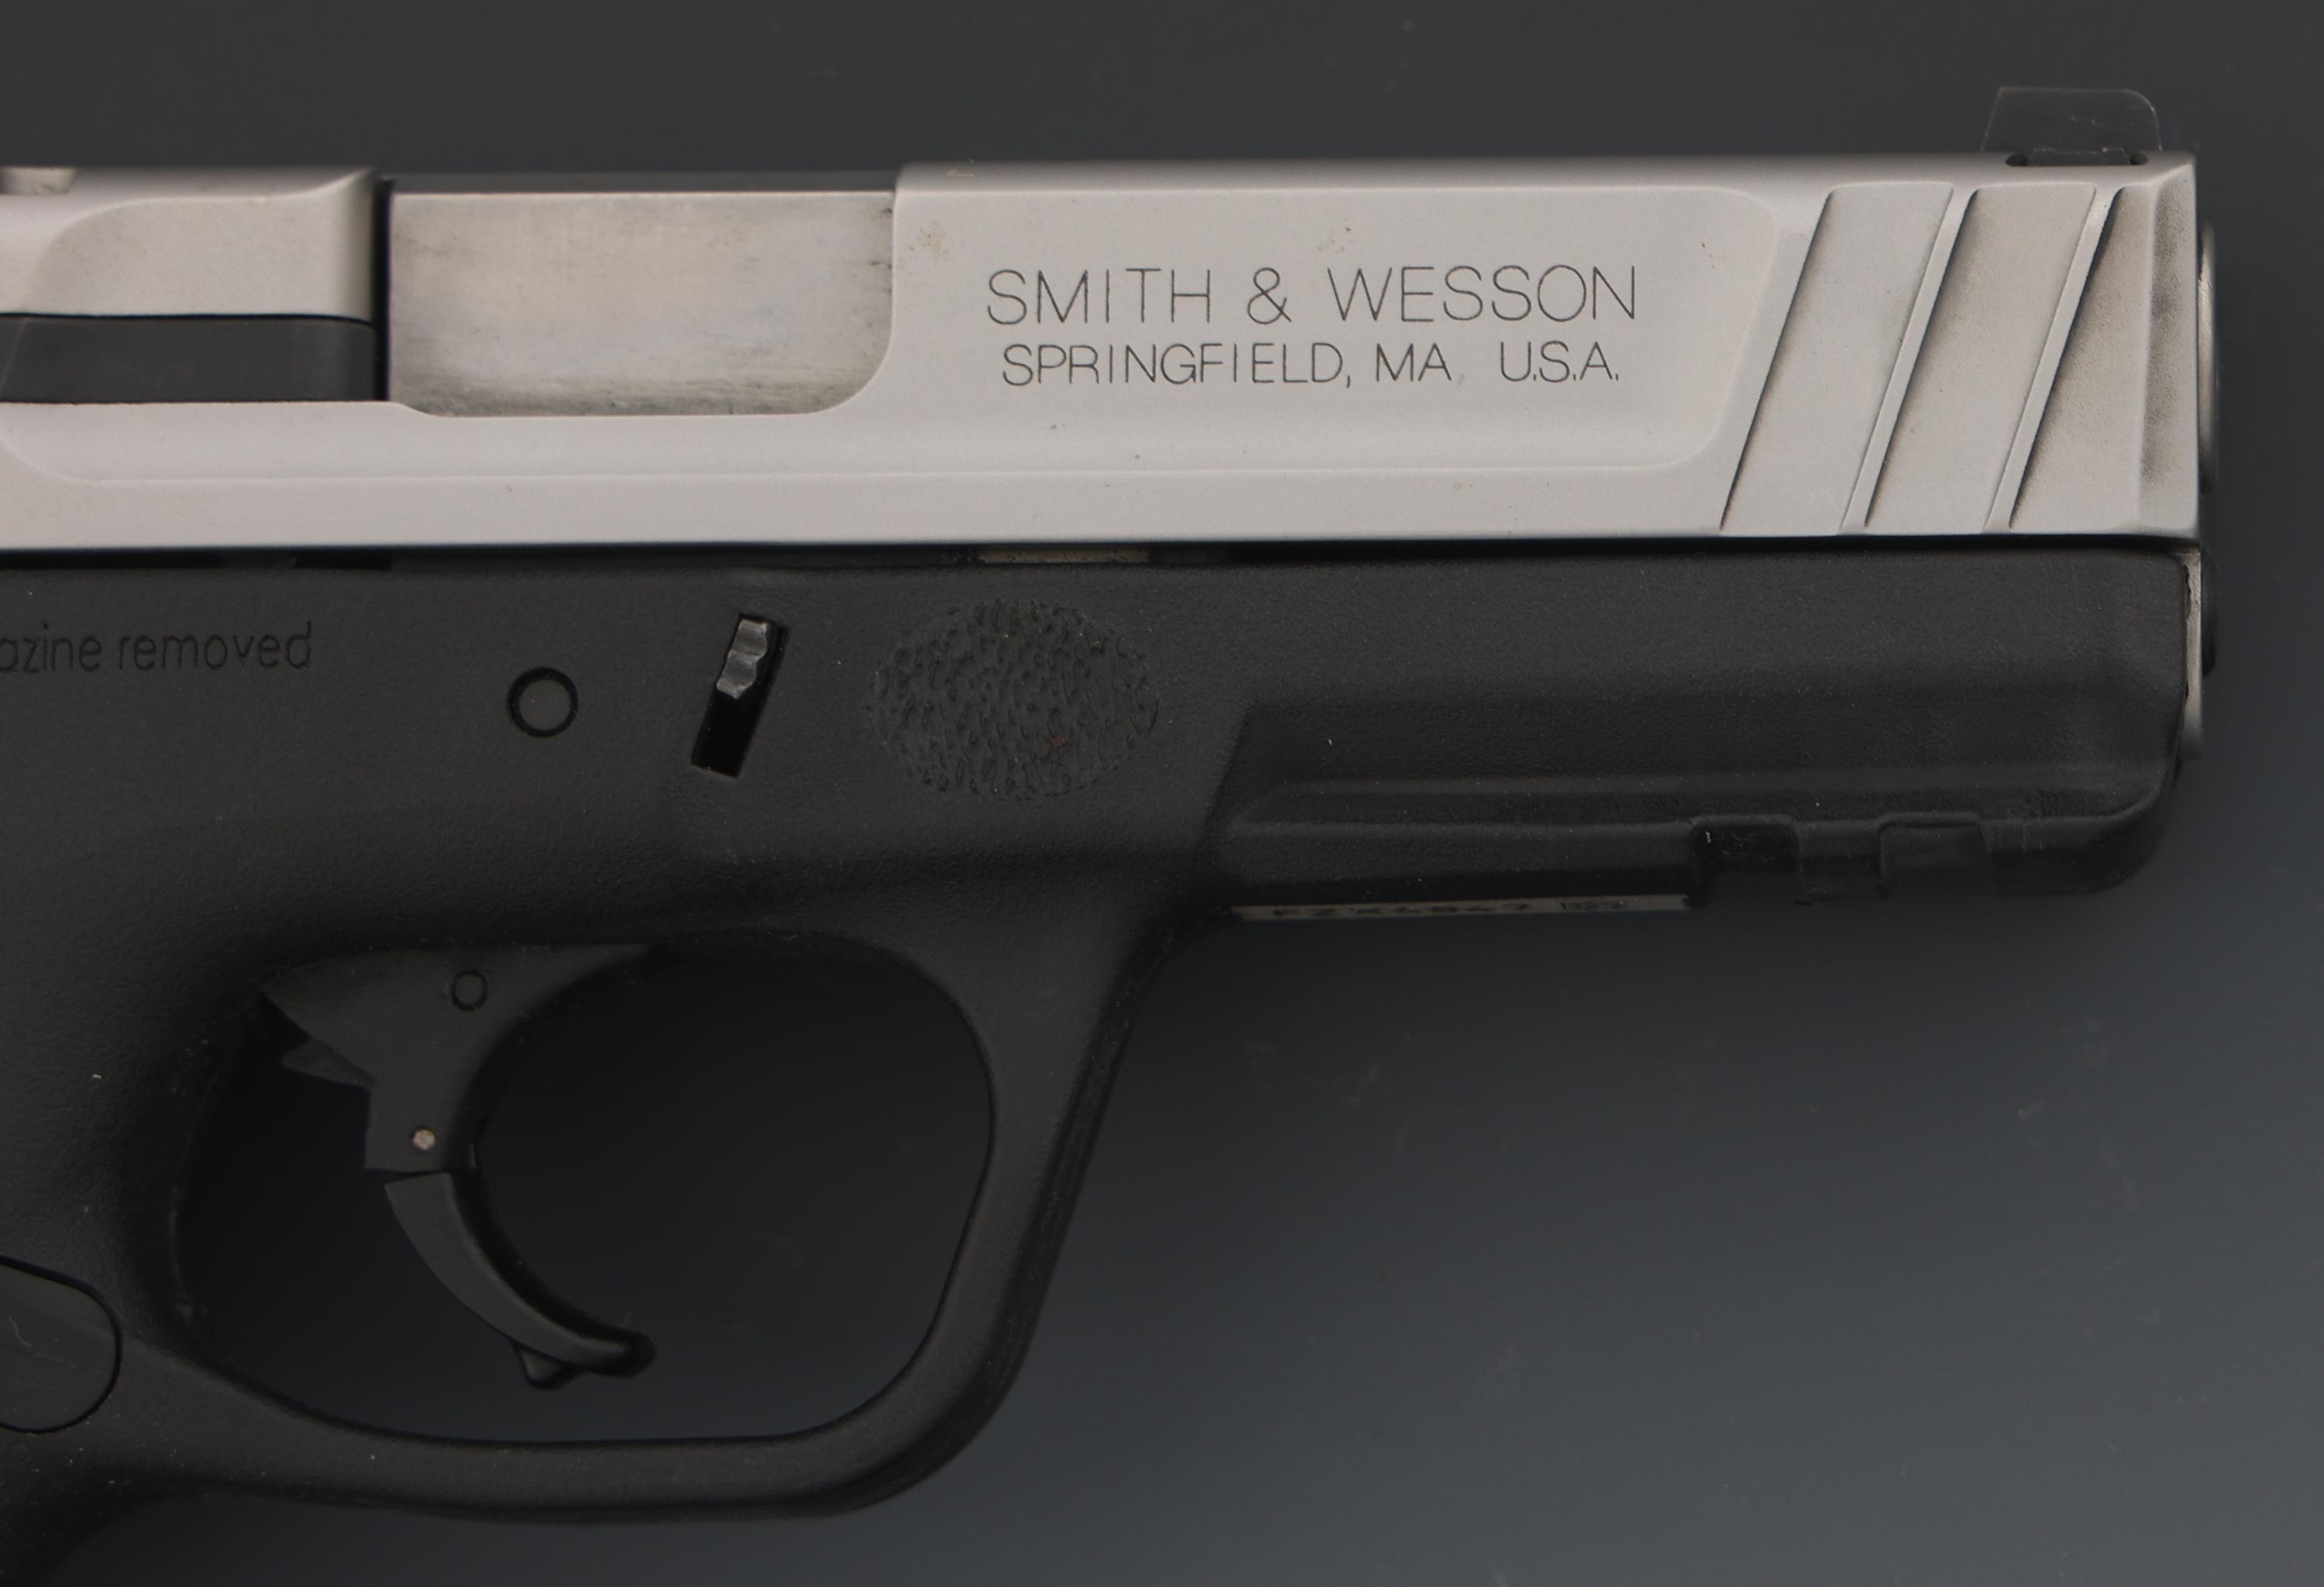 SMITH & WESSON MODEL SD9 VE 9x19mm CALIBER PISTOL